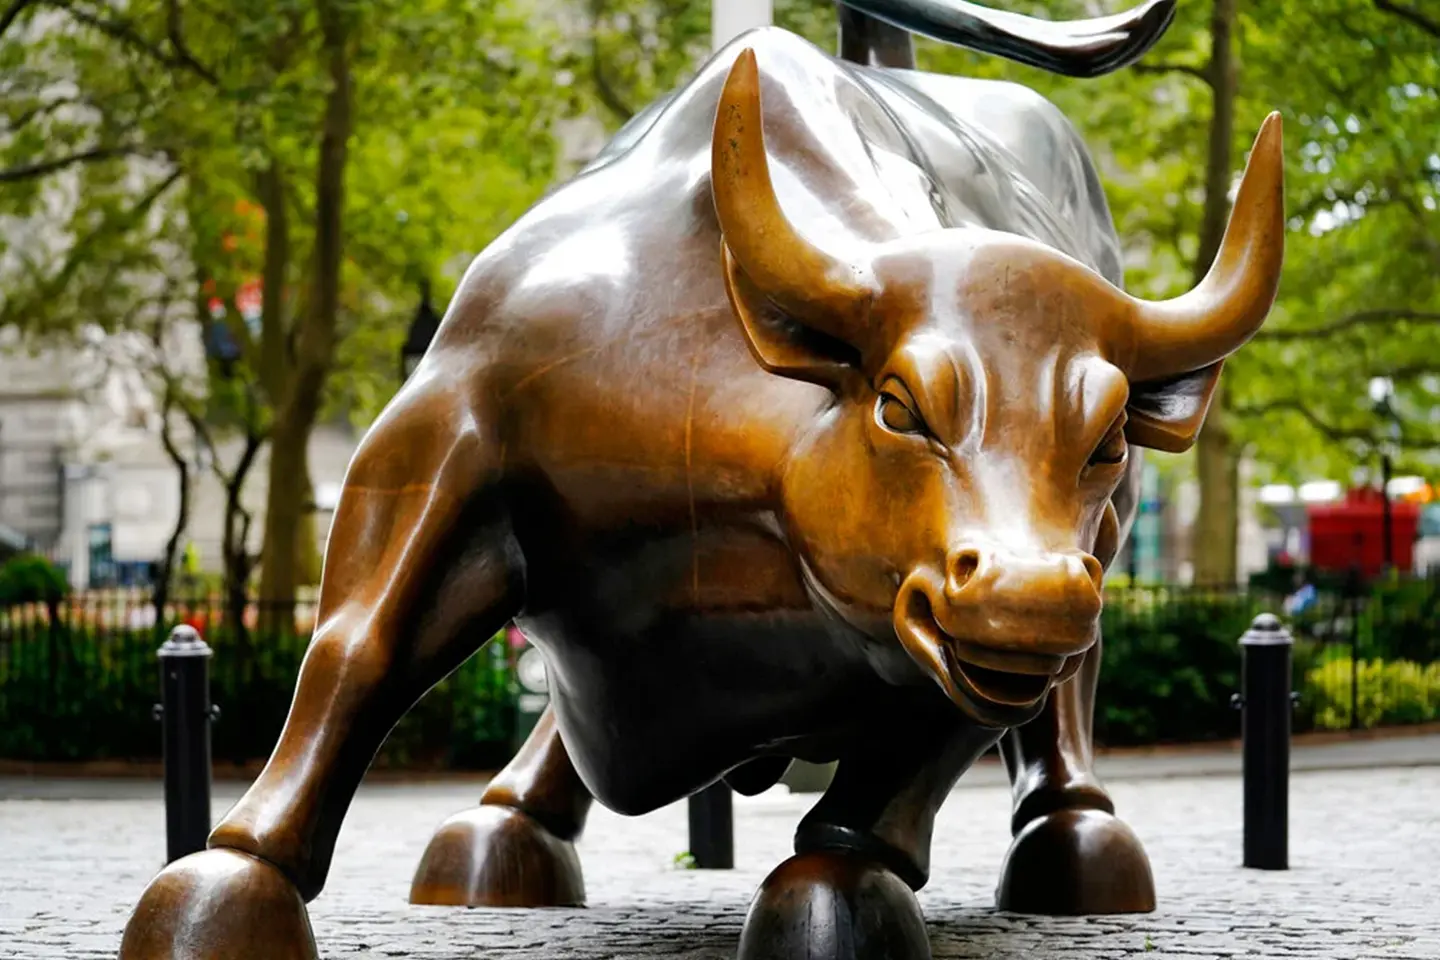 Bronze sculpture of a charging bull in a Manhattan city plaza.